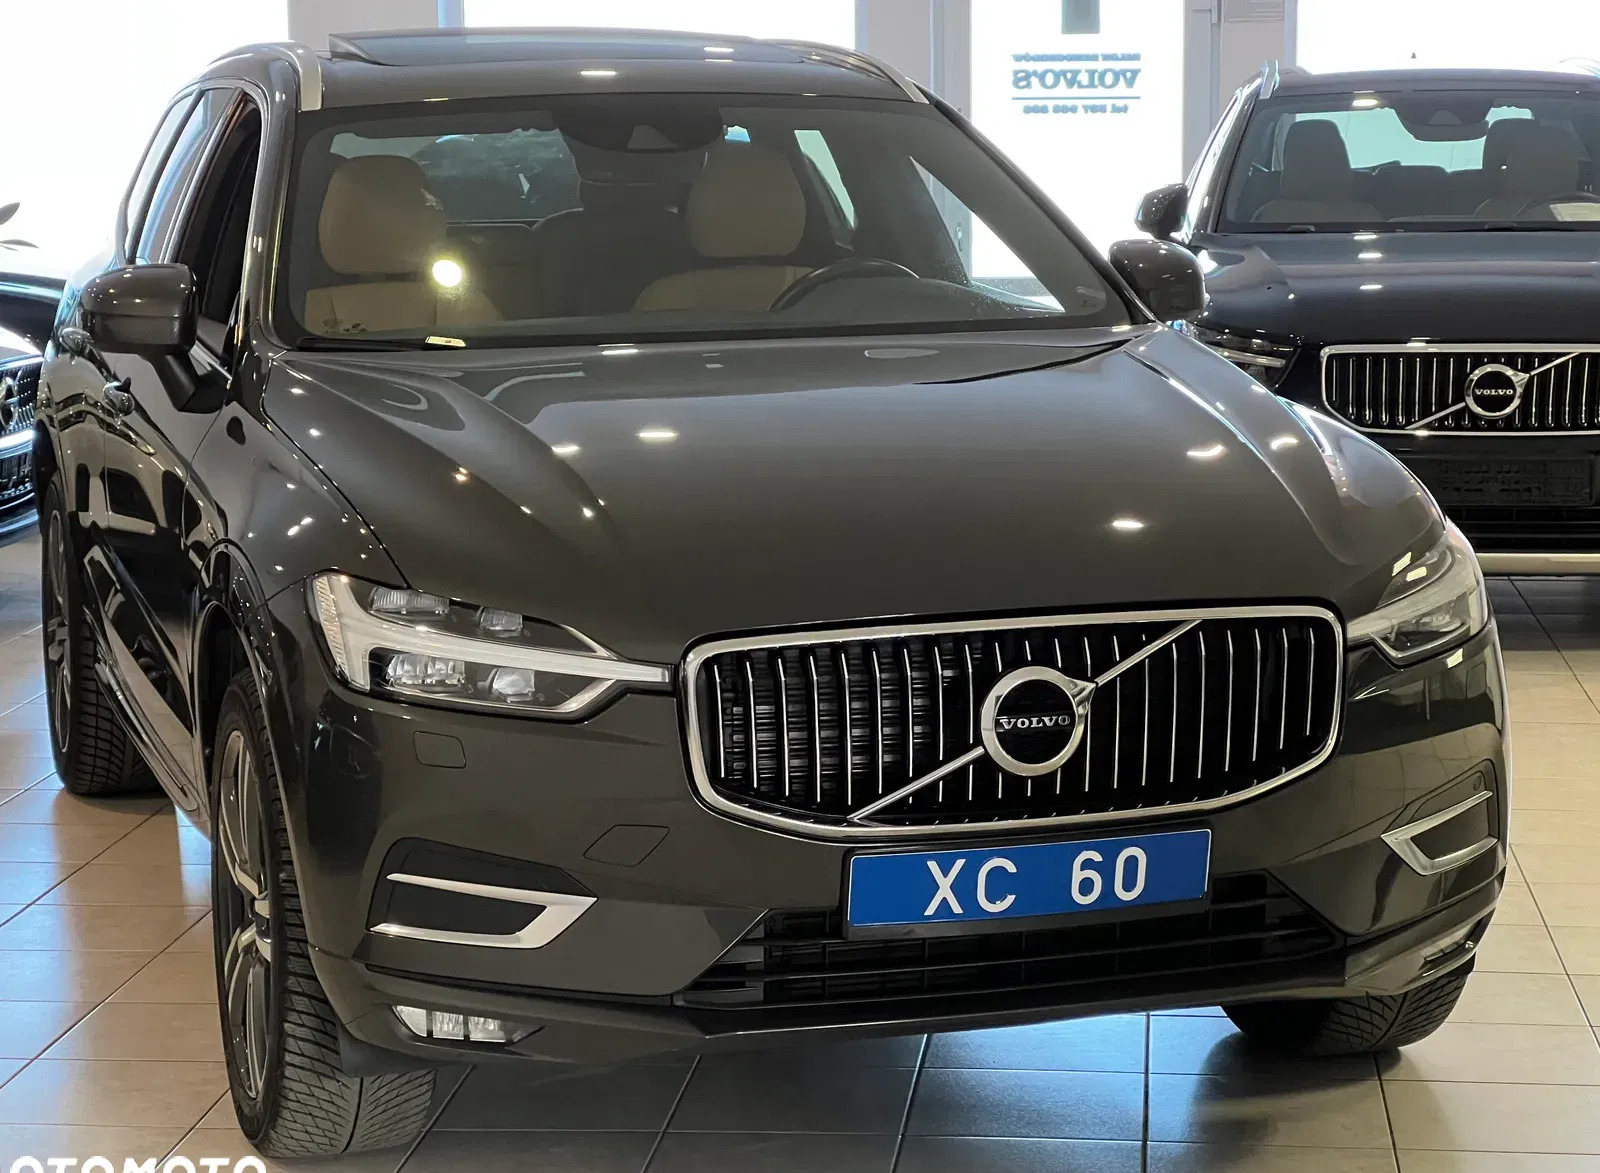 volvo górzno Volvo XC 60 cena 149000 przebieg: 168000, rok produkcji 2018 z Górzno